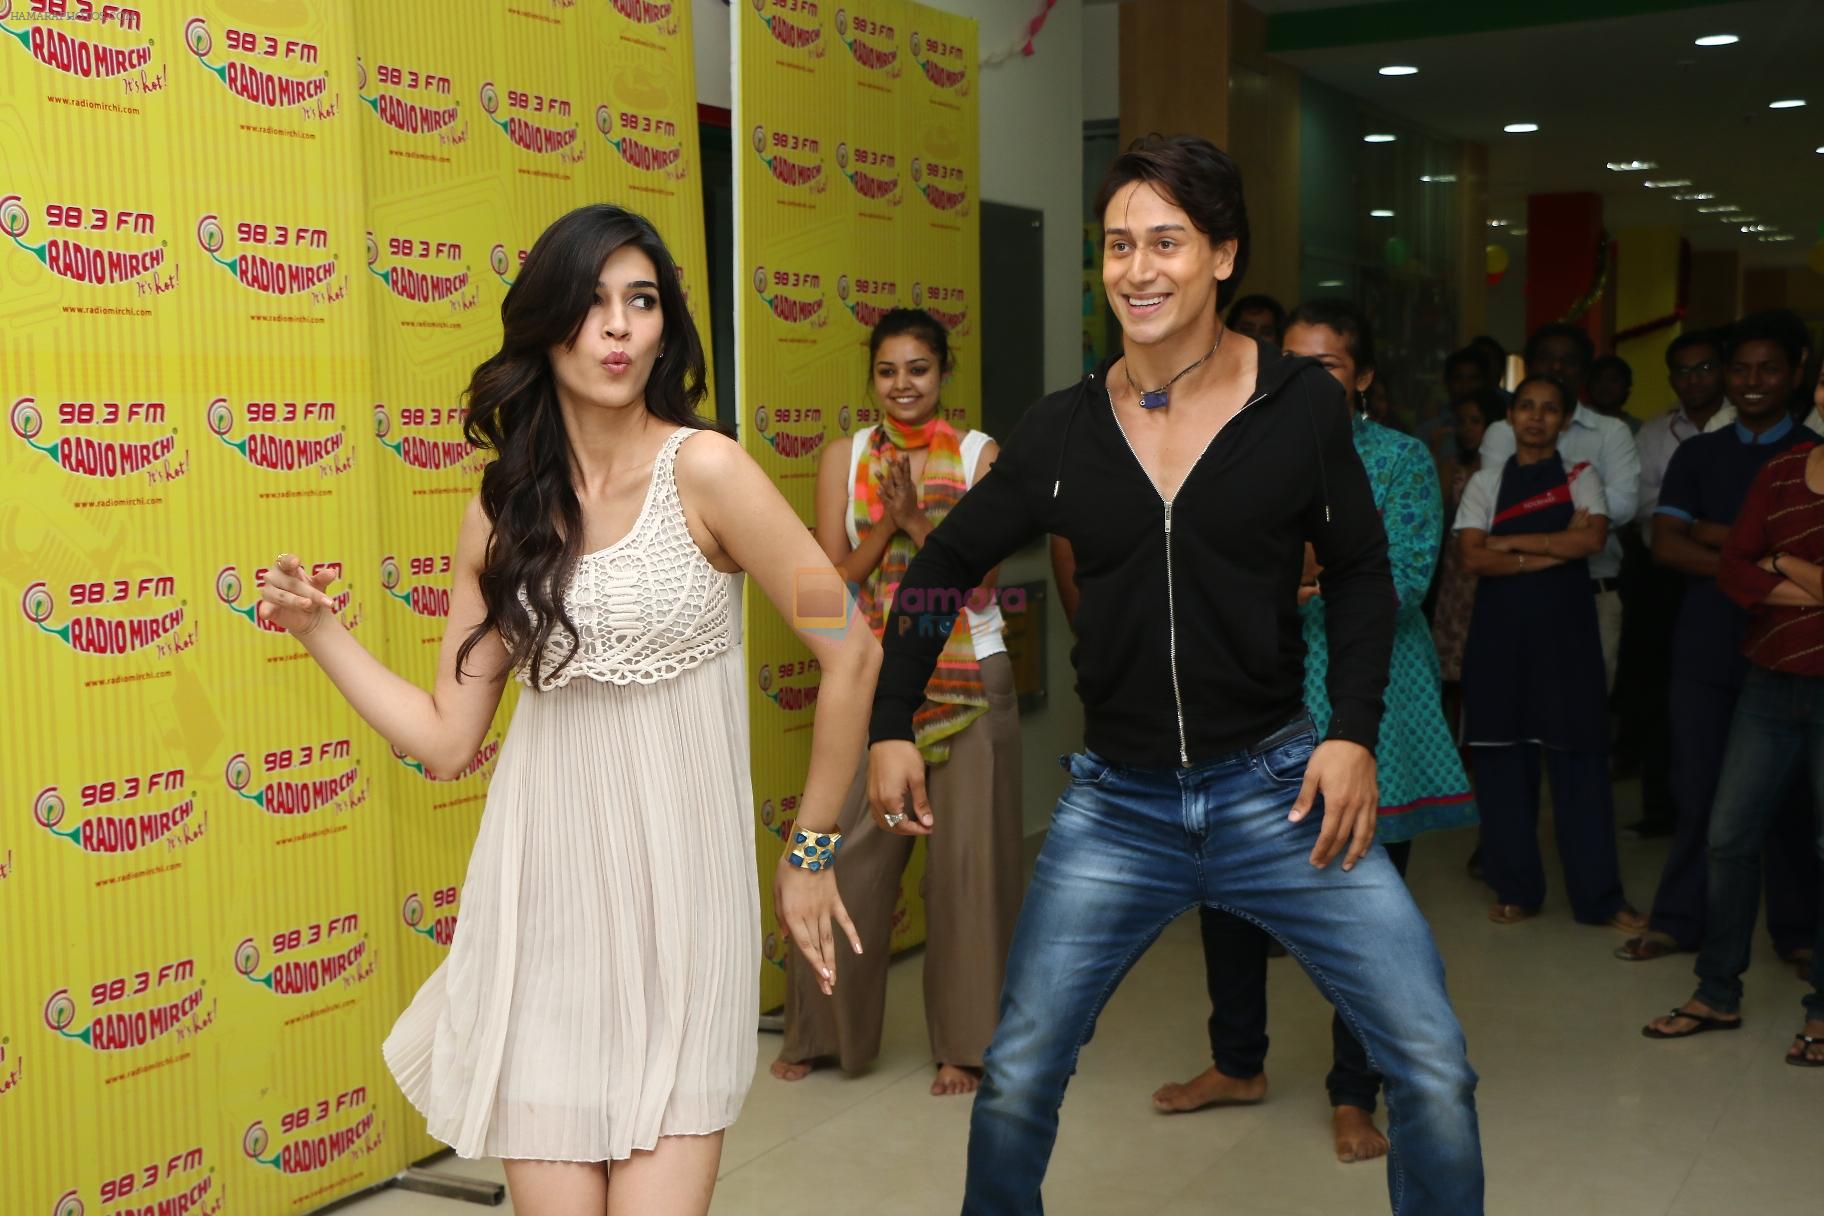 Tiger Shroff and Kriti Sanon doing the Wistle Dance at Radio Mirchi Mumbai studio during the promotion of their upcoming movie Heropanti